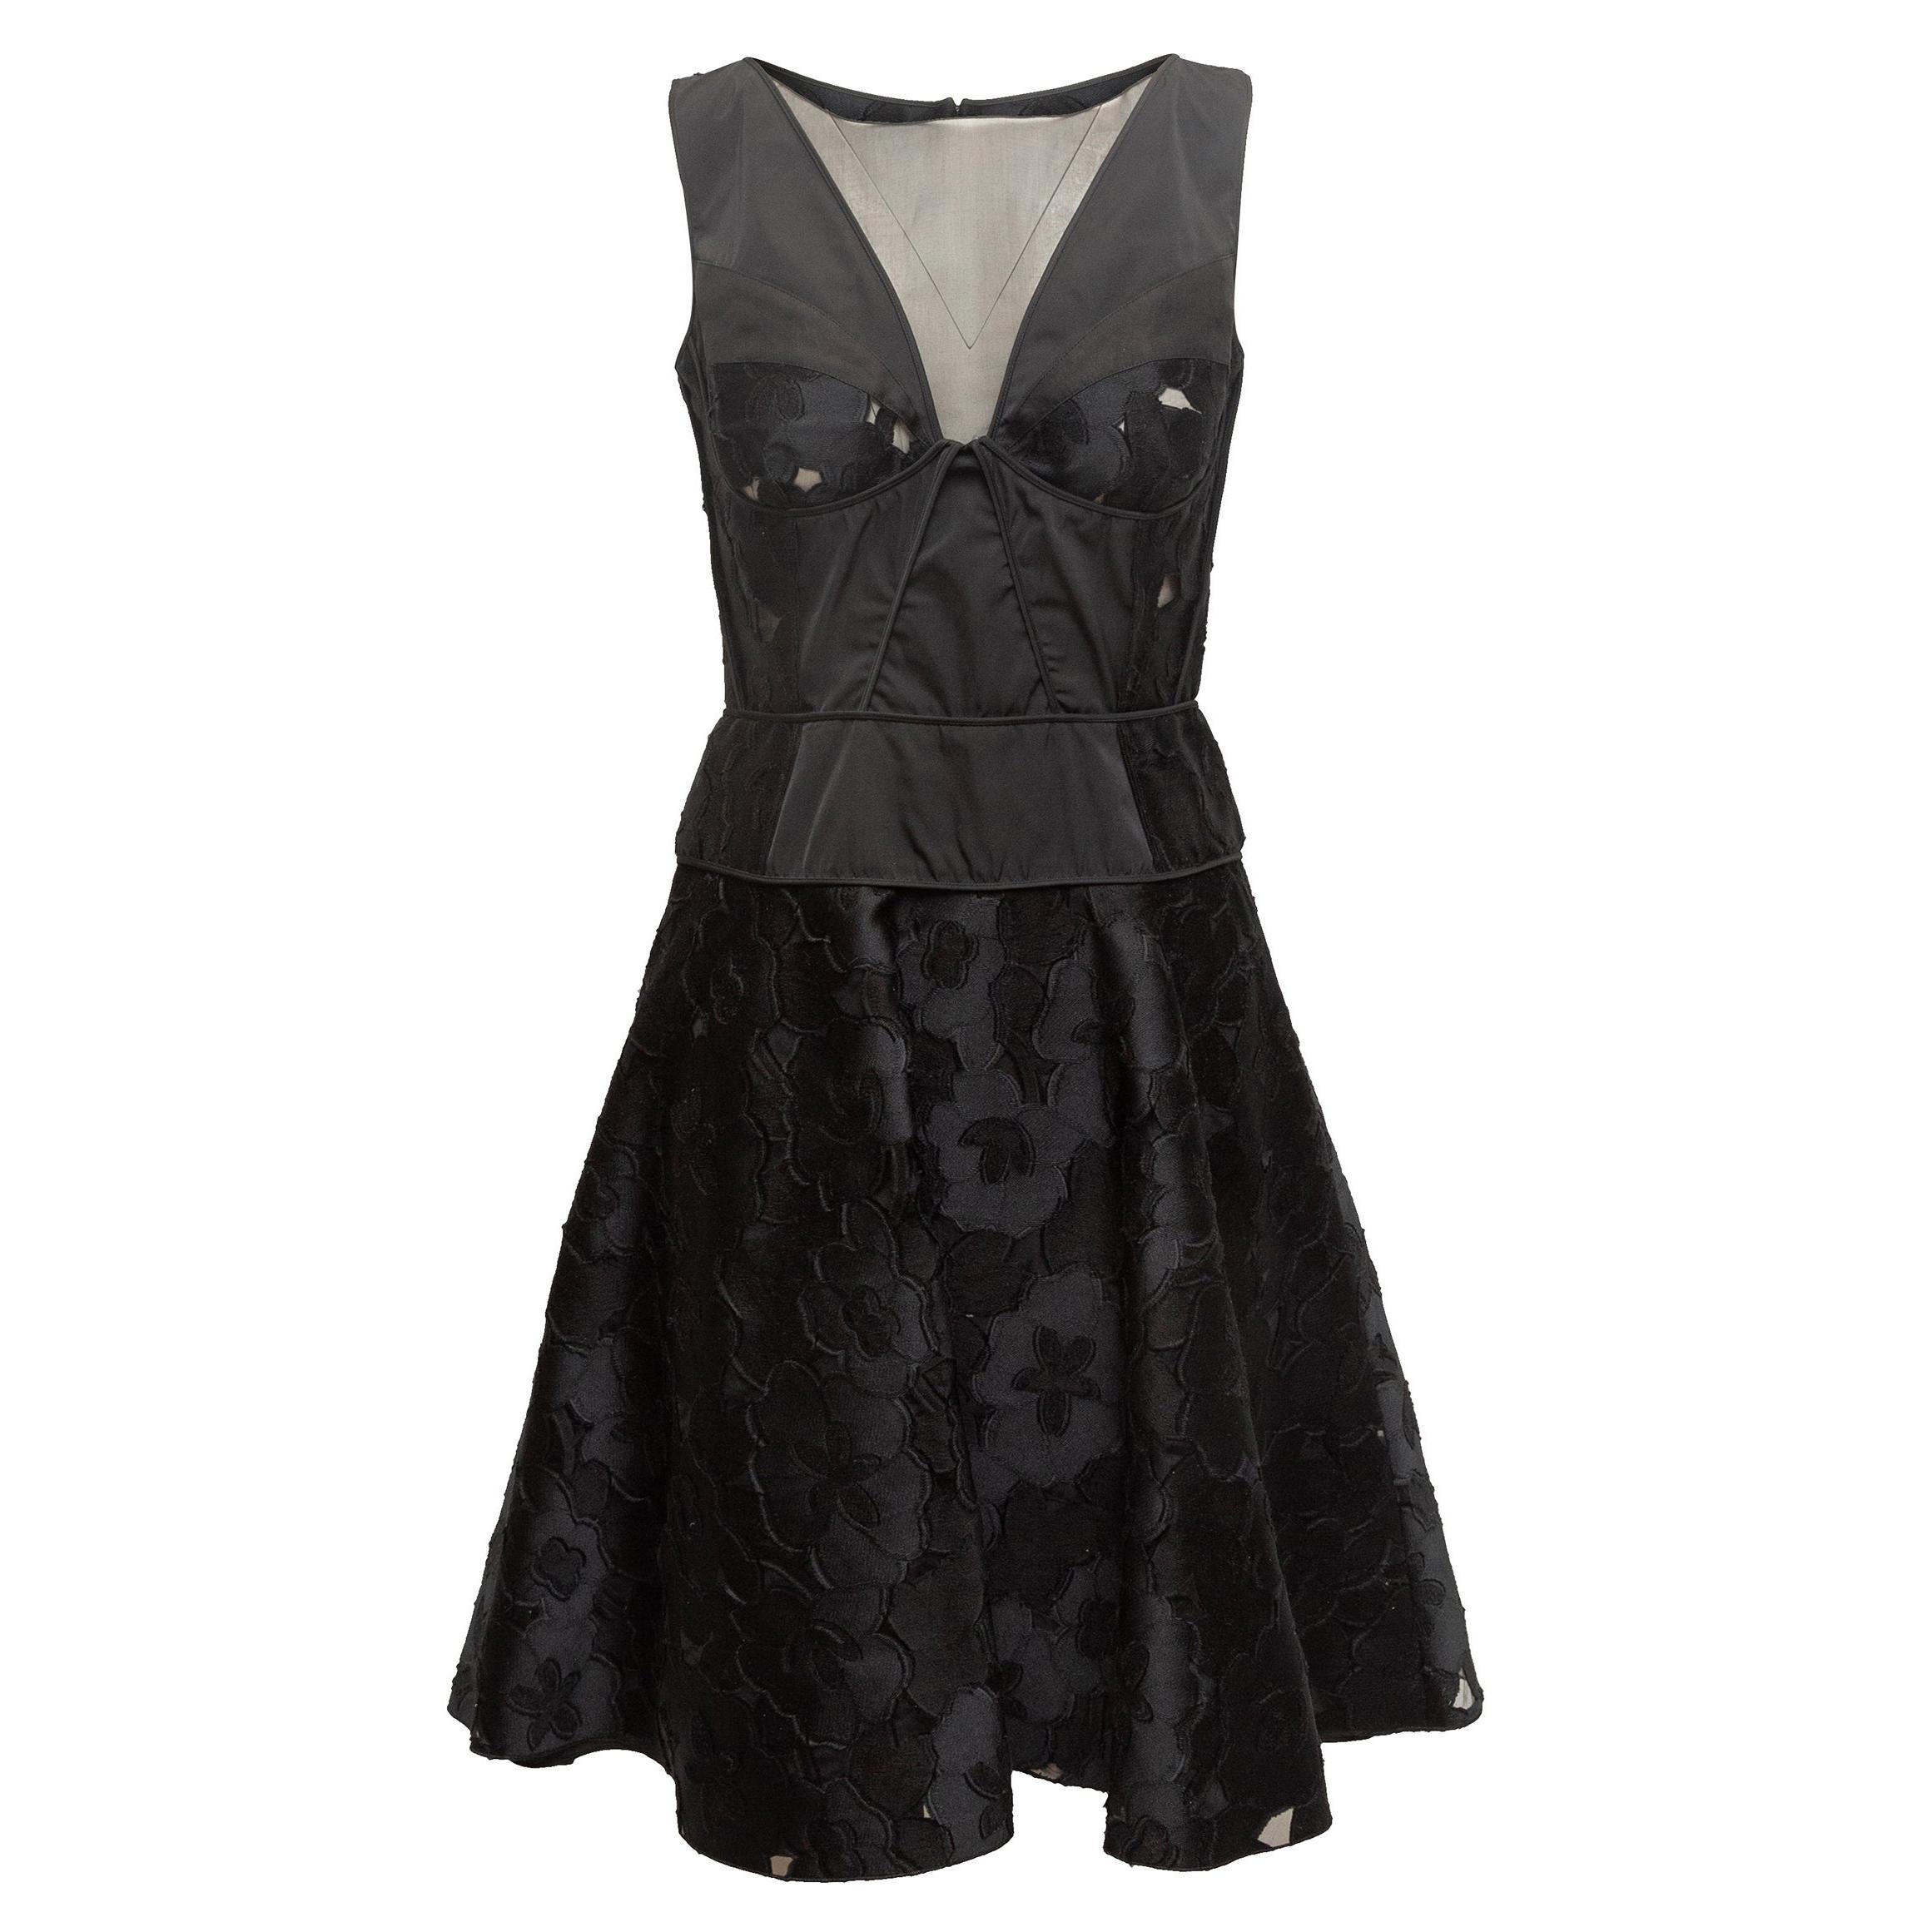 Nina Ricci Black Sleeveless Floral Patterned Dress